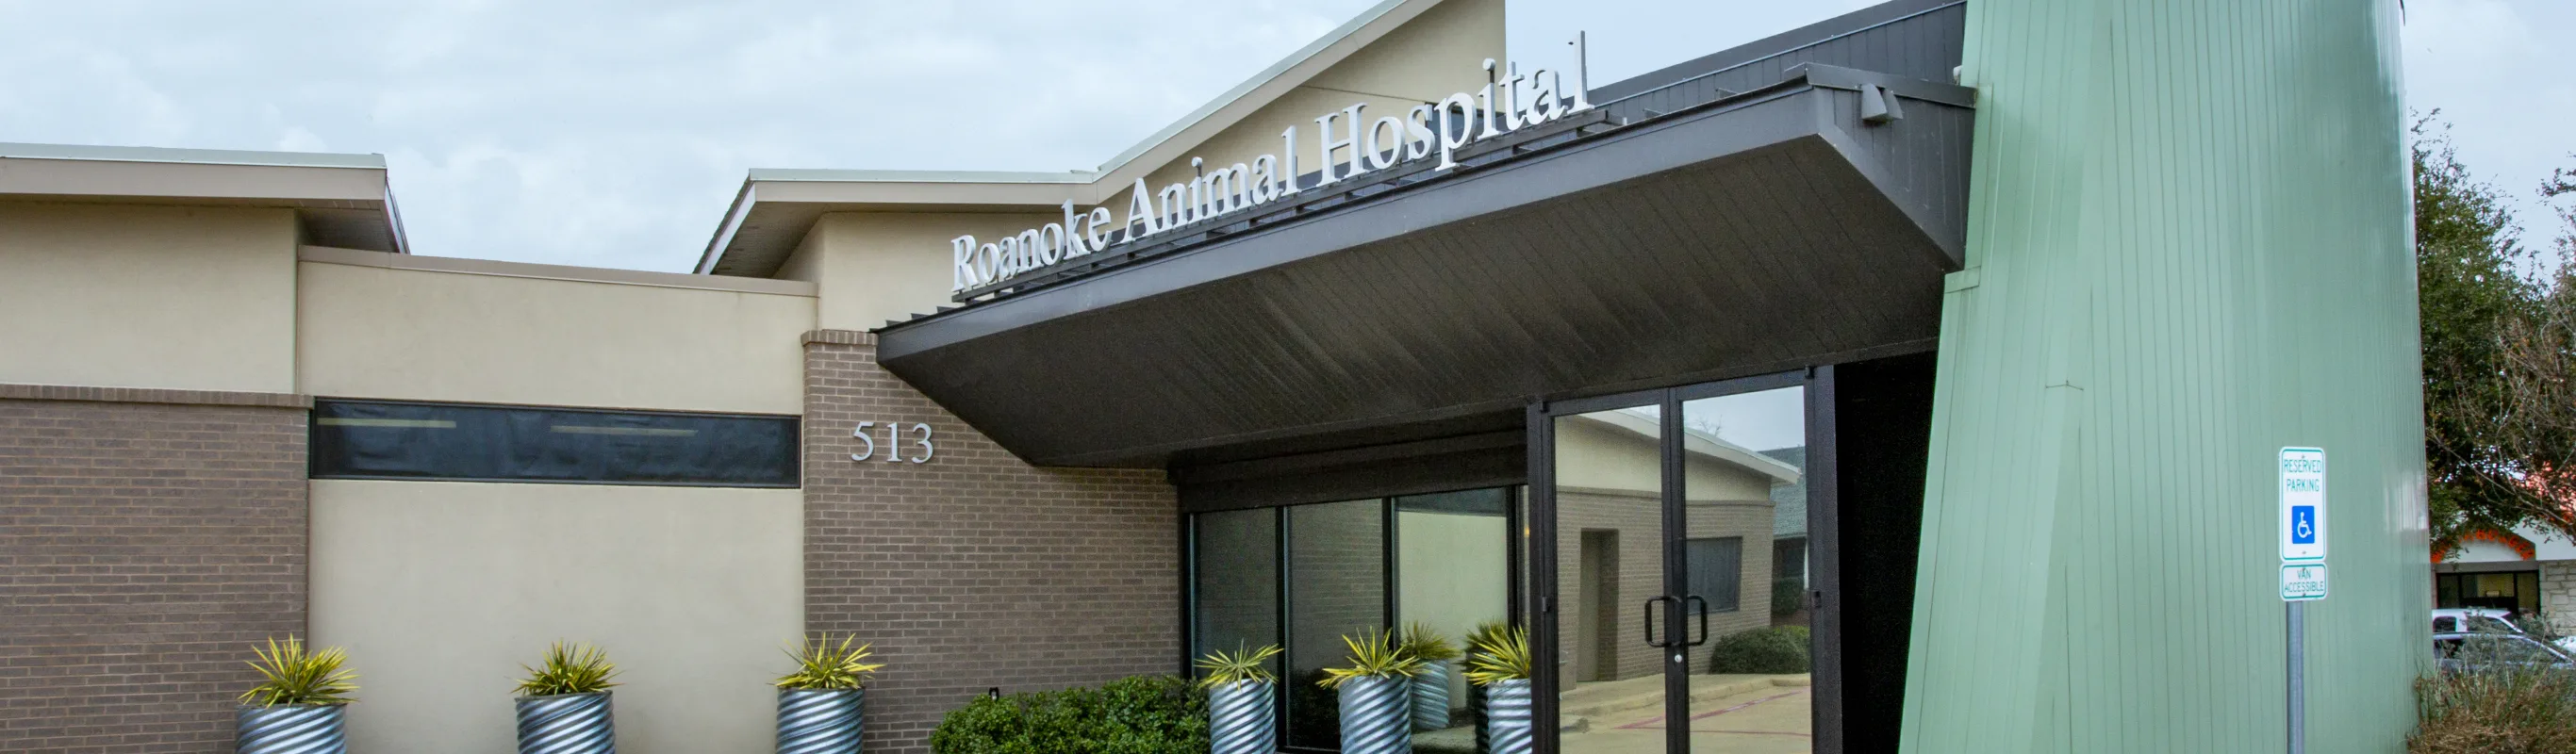 Roanoke Animal Hospital entrance